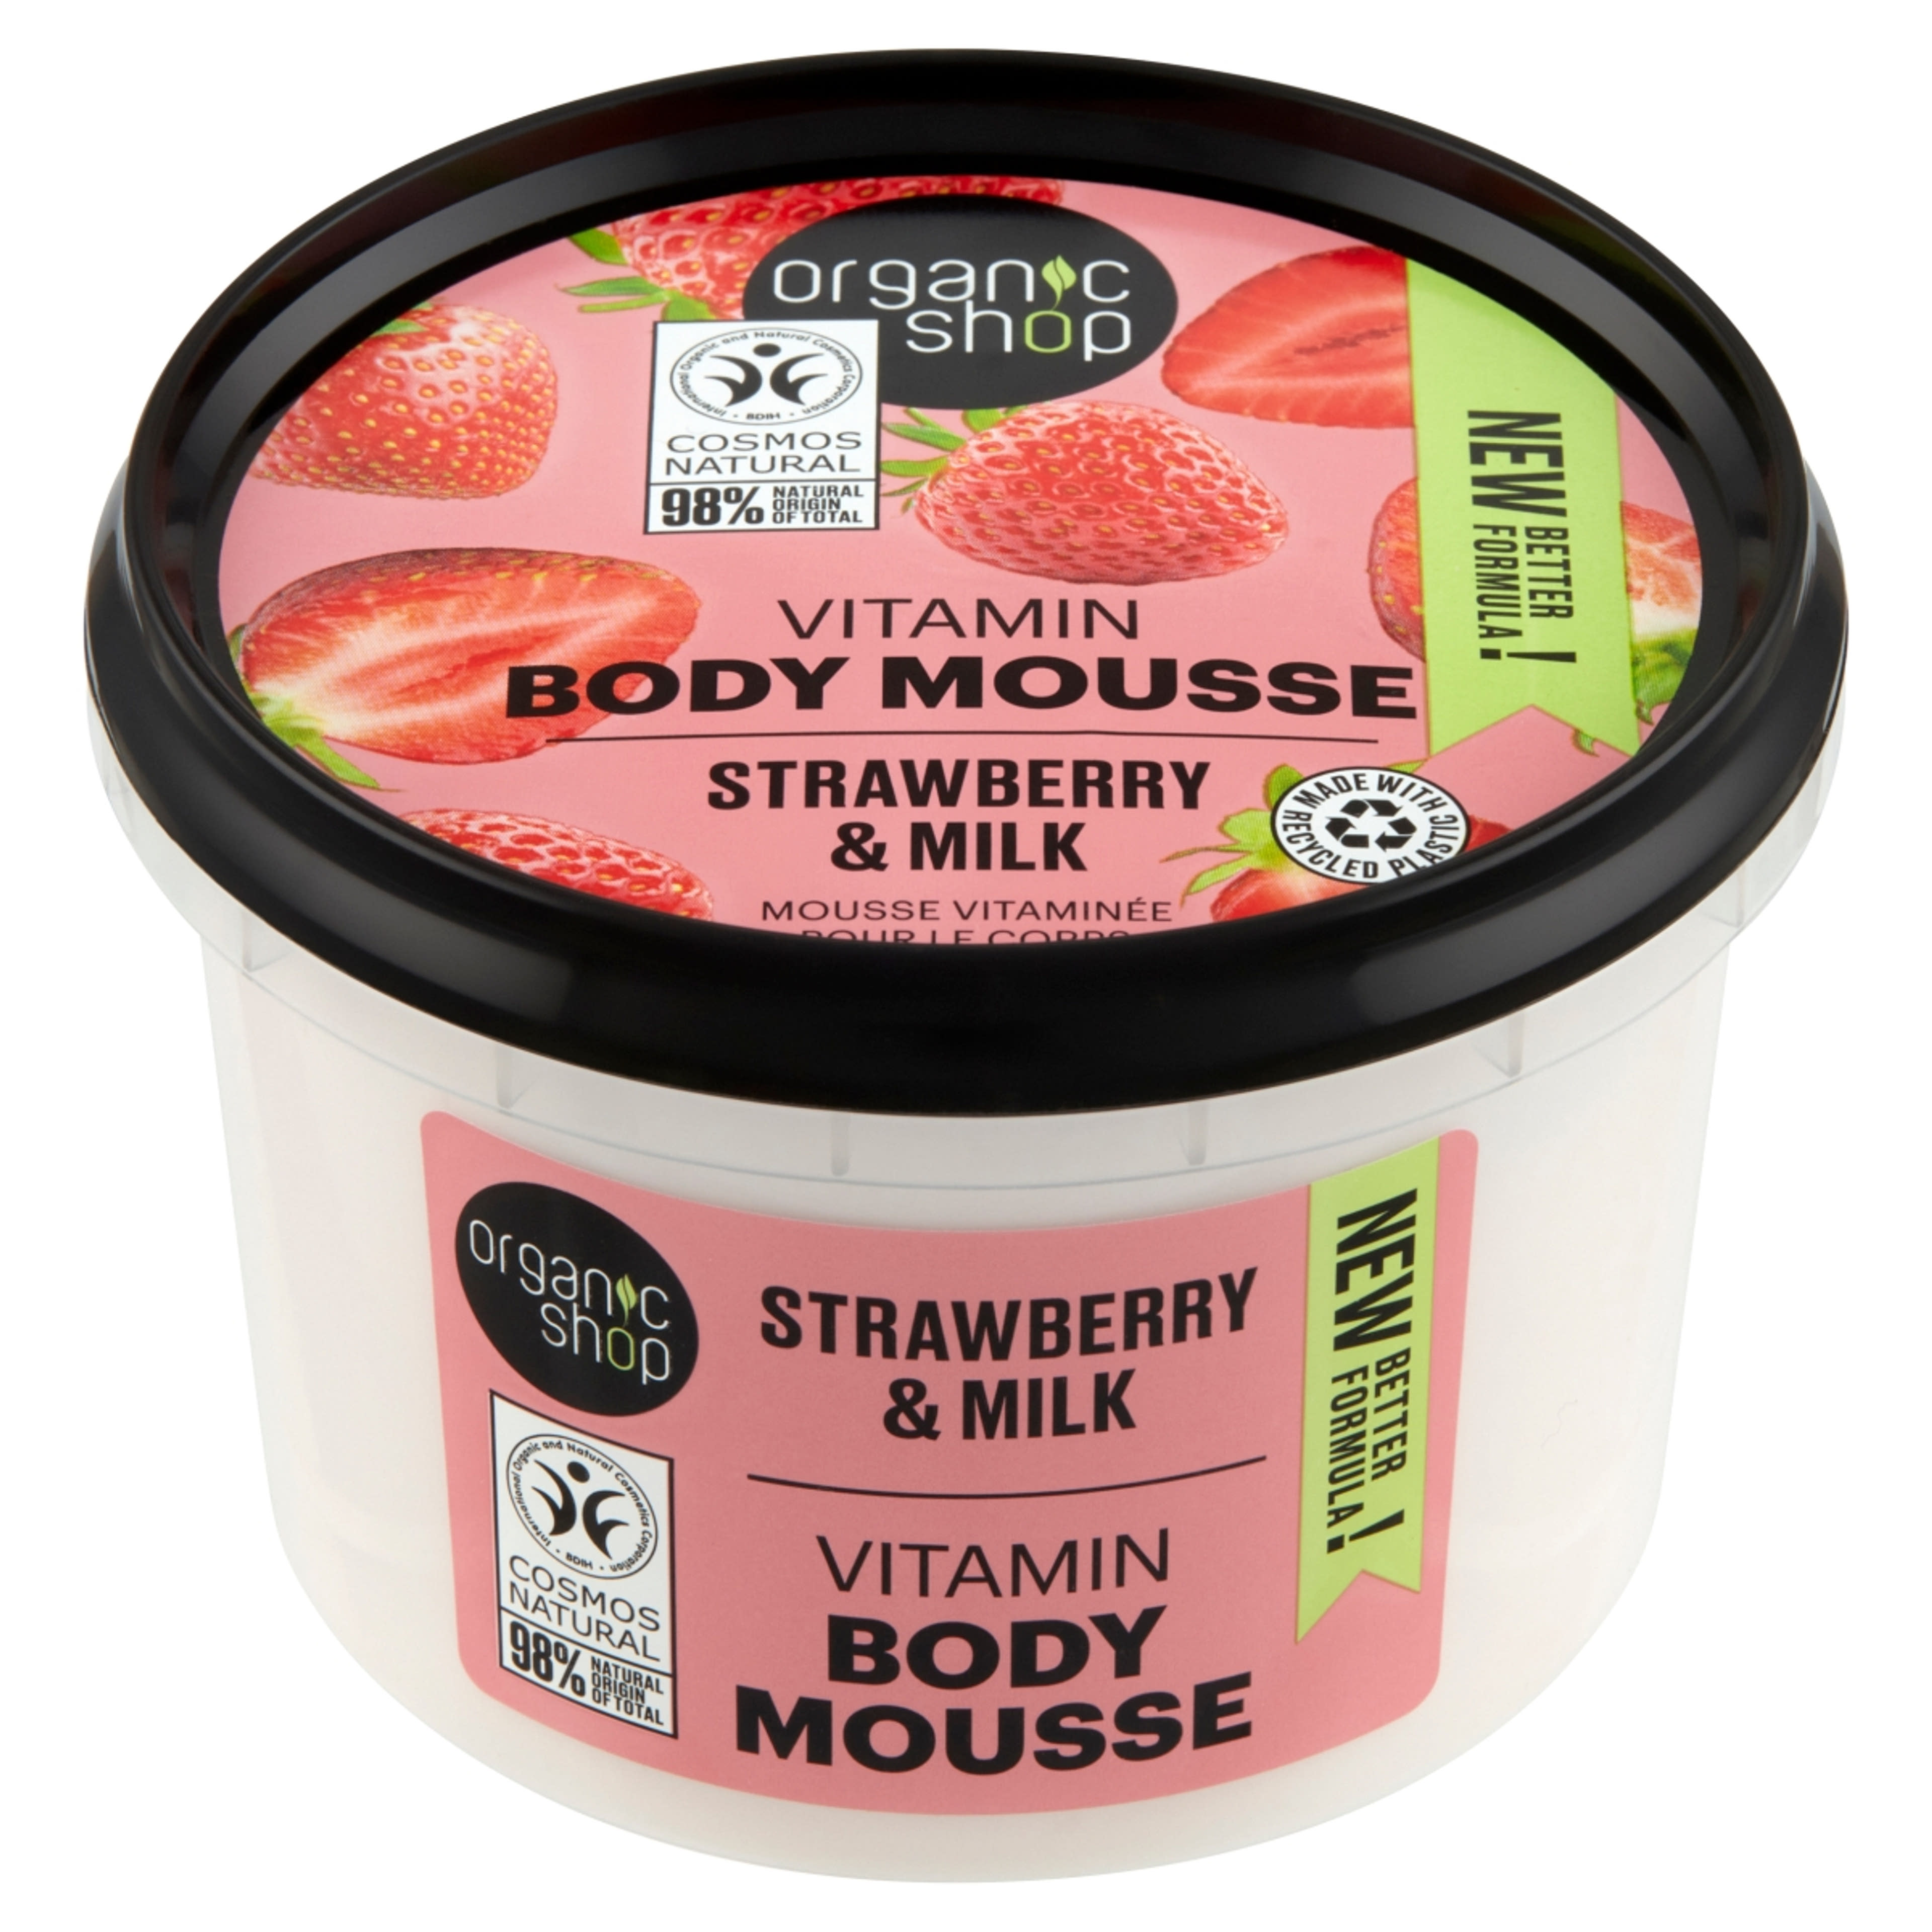 Organic shop epres yoghurt test mousse - 250 ml-2